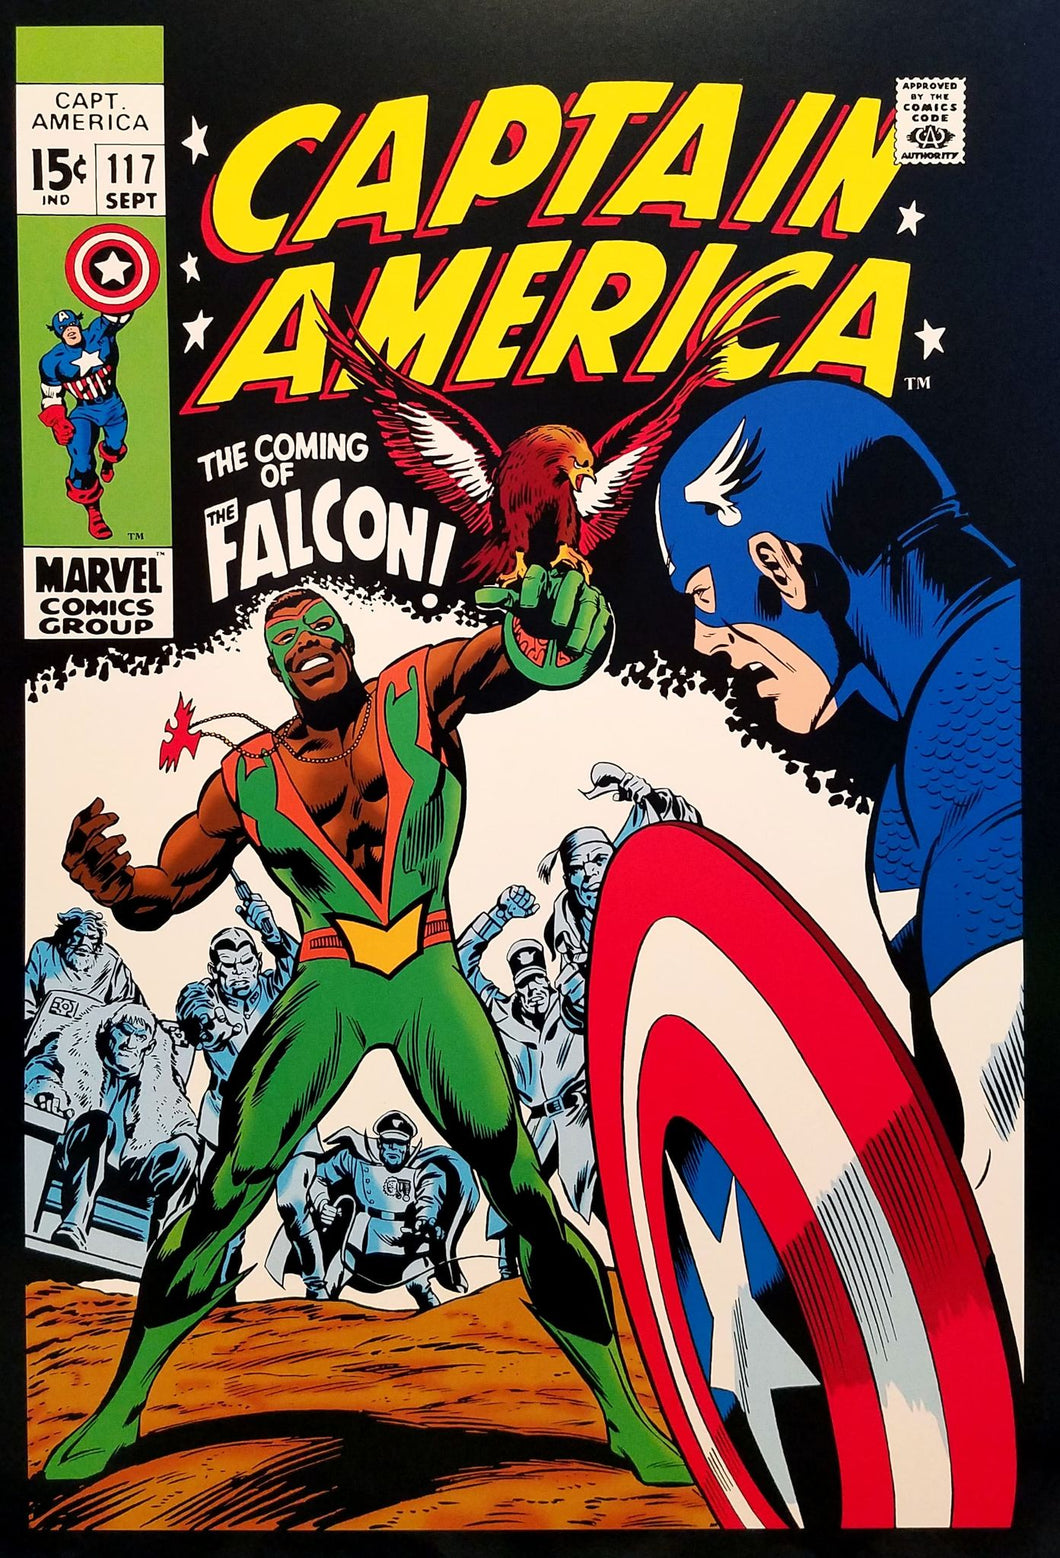 Captain America #117 12x16 FRAMED Art Print by Gene Colan (1st Falcon 1969), New Marvel Comics cardstock